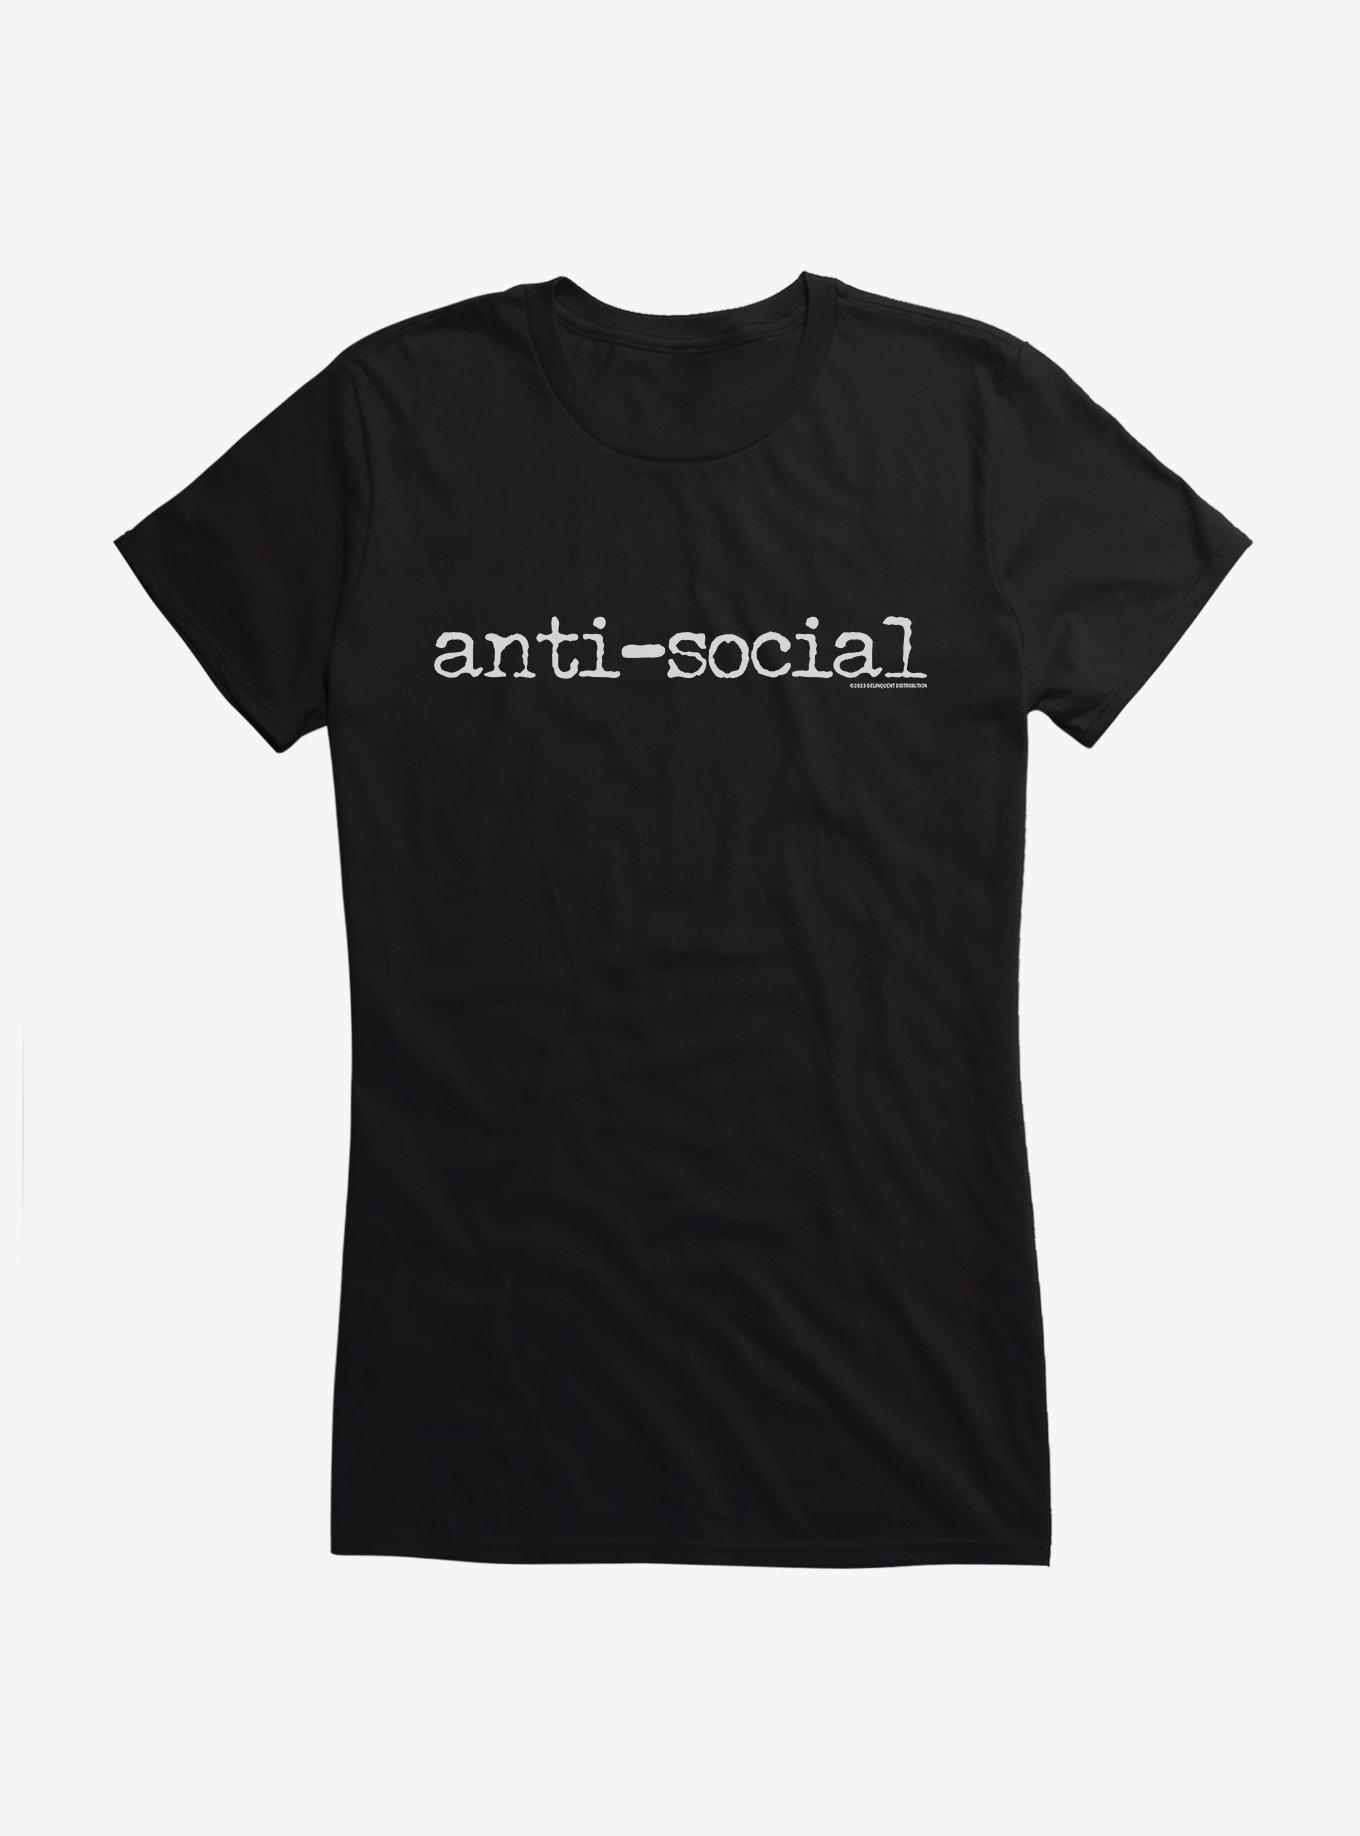 Hot Topic Anti-Social Girls T-Shirt | CoolSprings Galleria